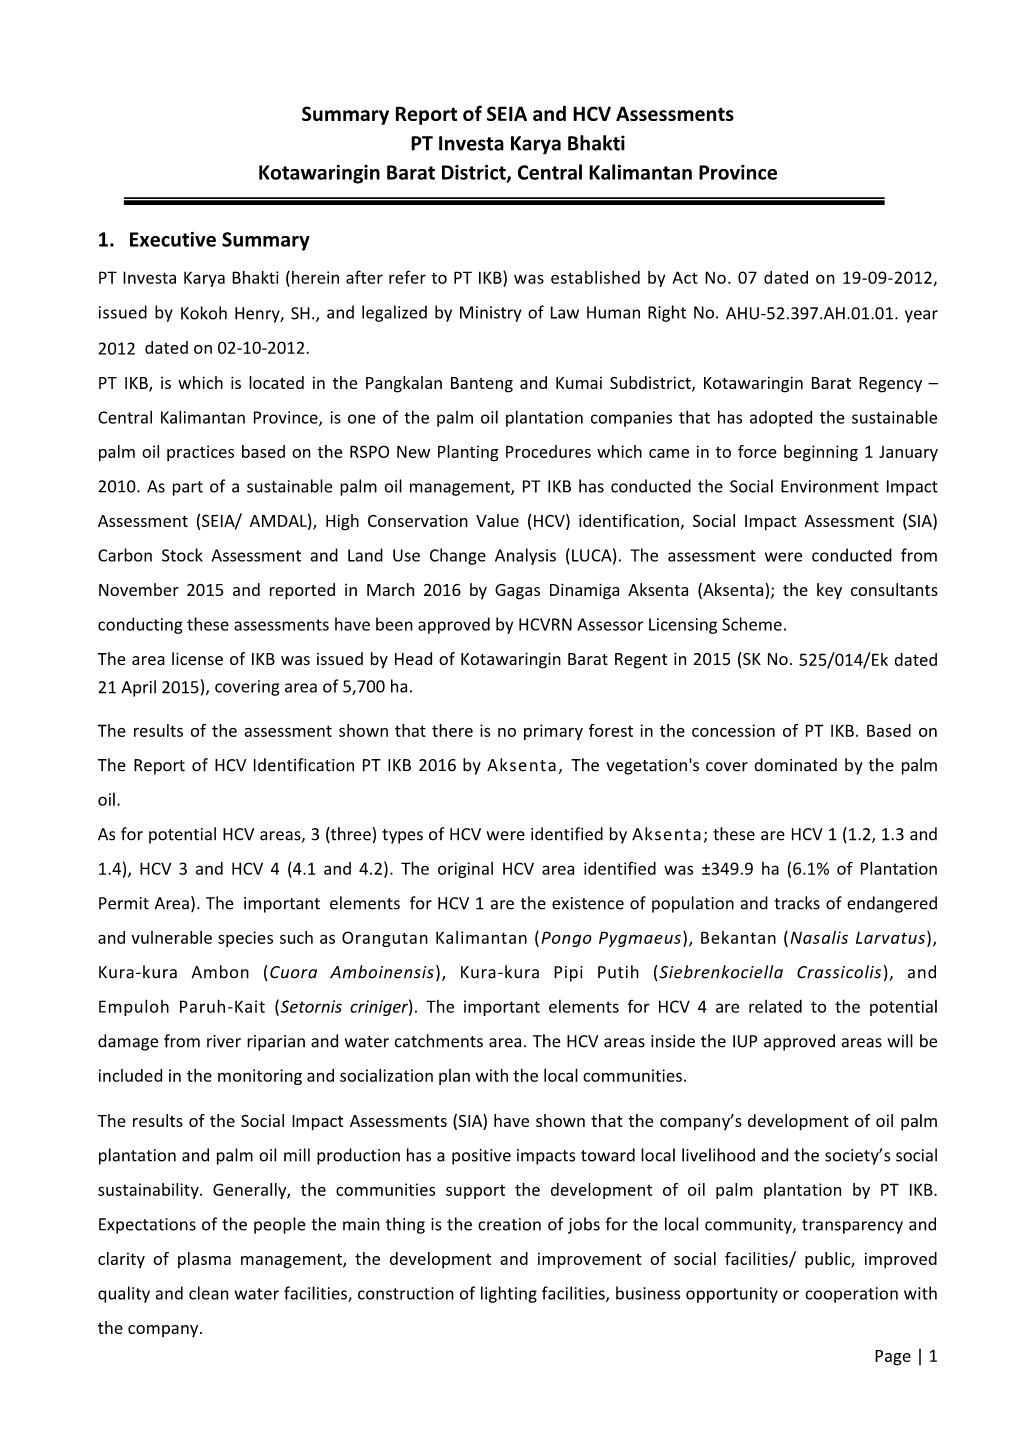 Summary Report of SEIA and HCV Assessments PT Investa Karya Bhakti Kotawaringin Barat District, Central Kalimantan Province